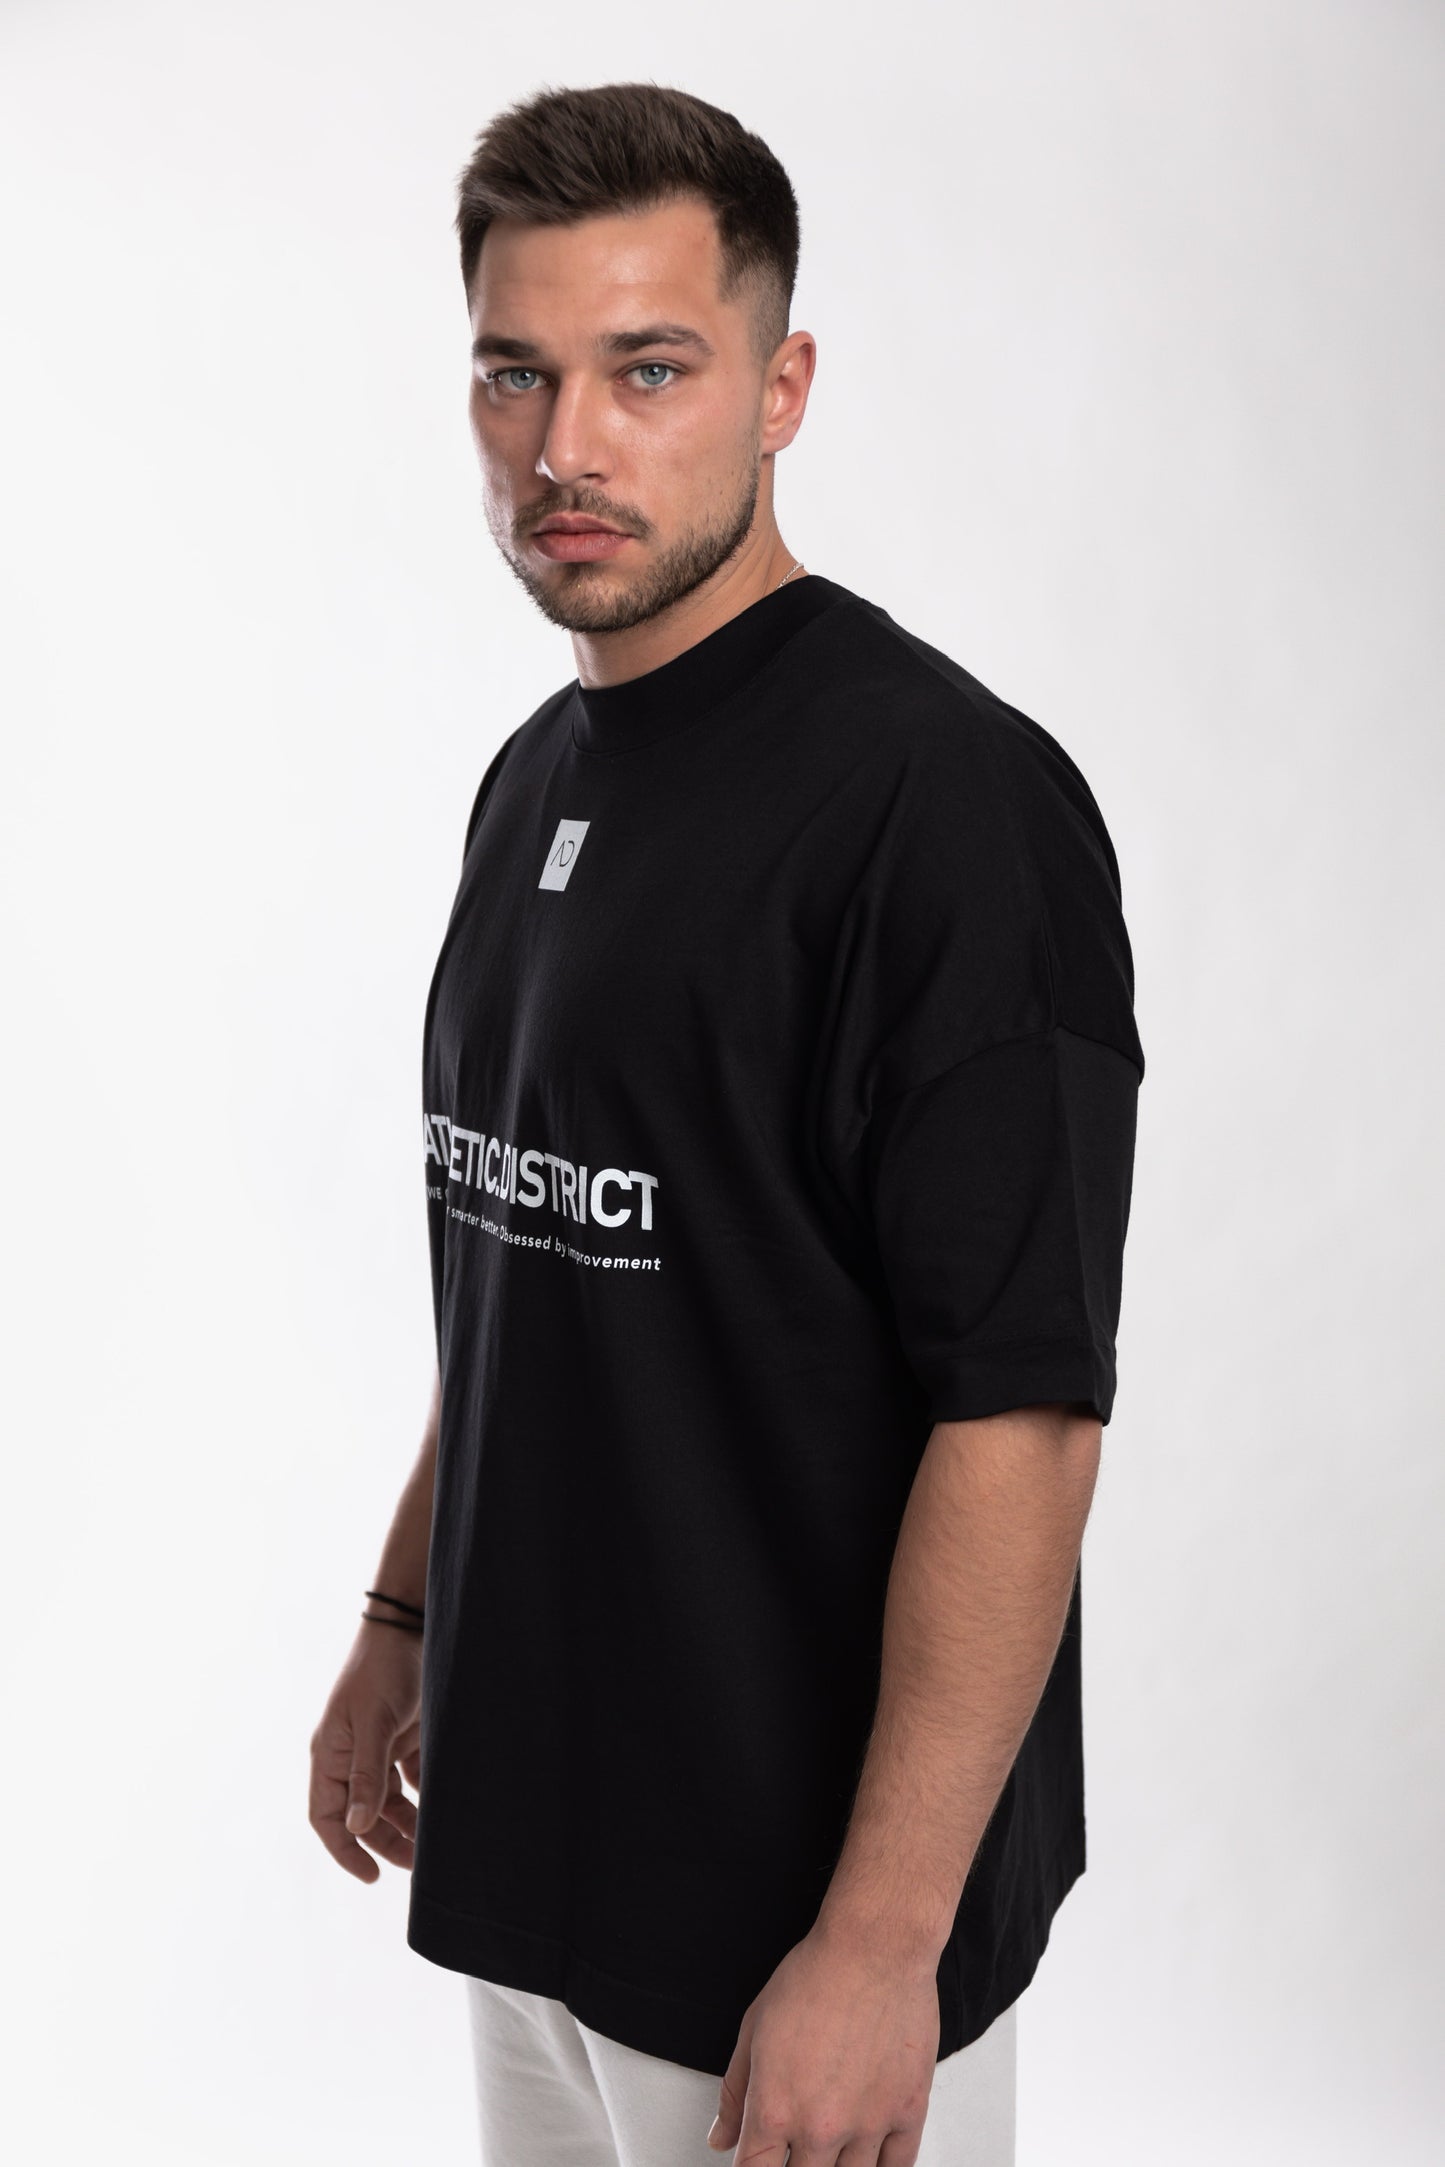 Athletic District - WE GRIND Kollektion - Organic Oversize T-Shirt-black grey print